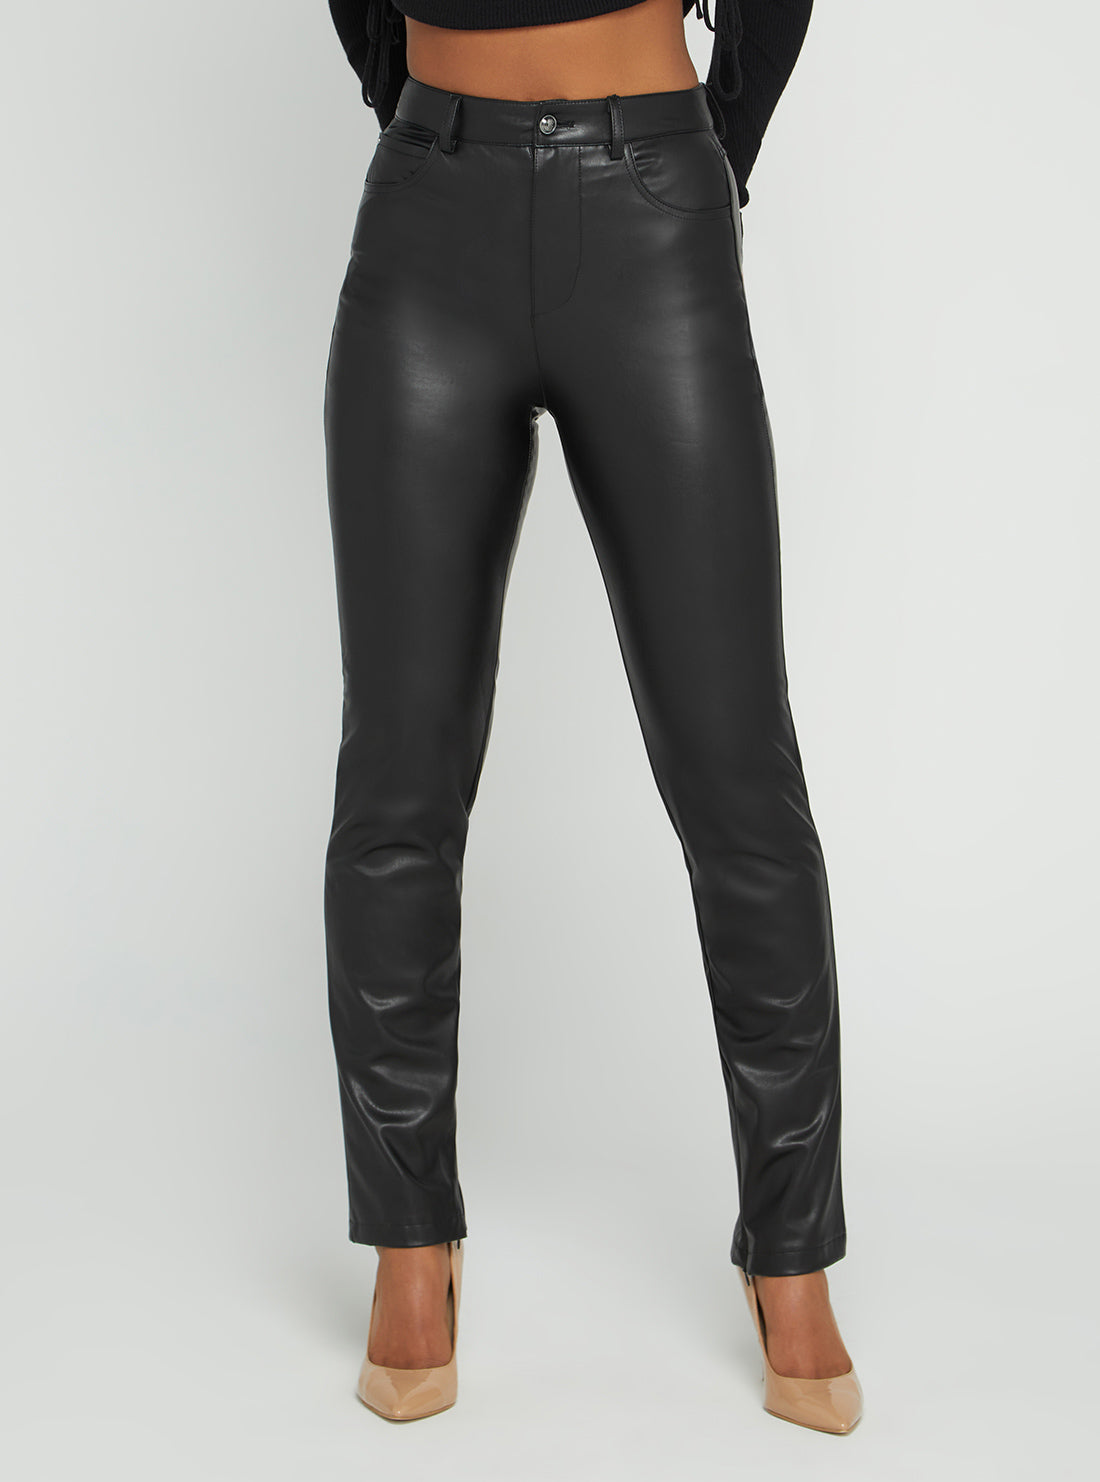 GUESS Women's Black Caroline Faux Leather Pants W2BB11WERD0 Front View